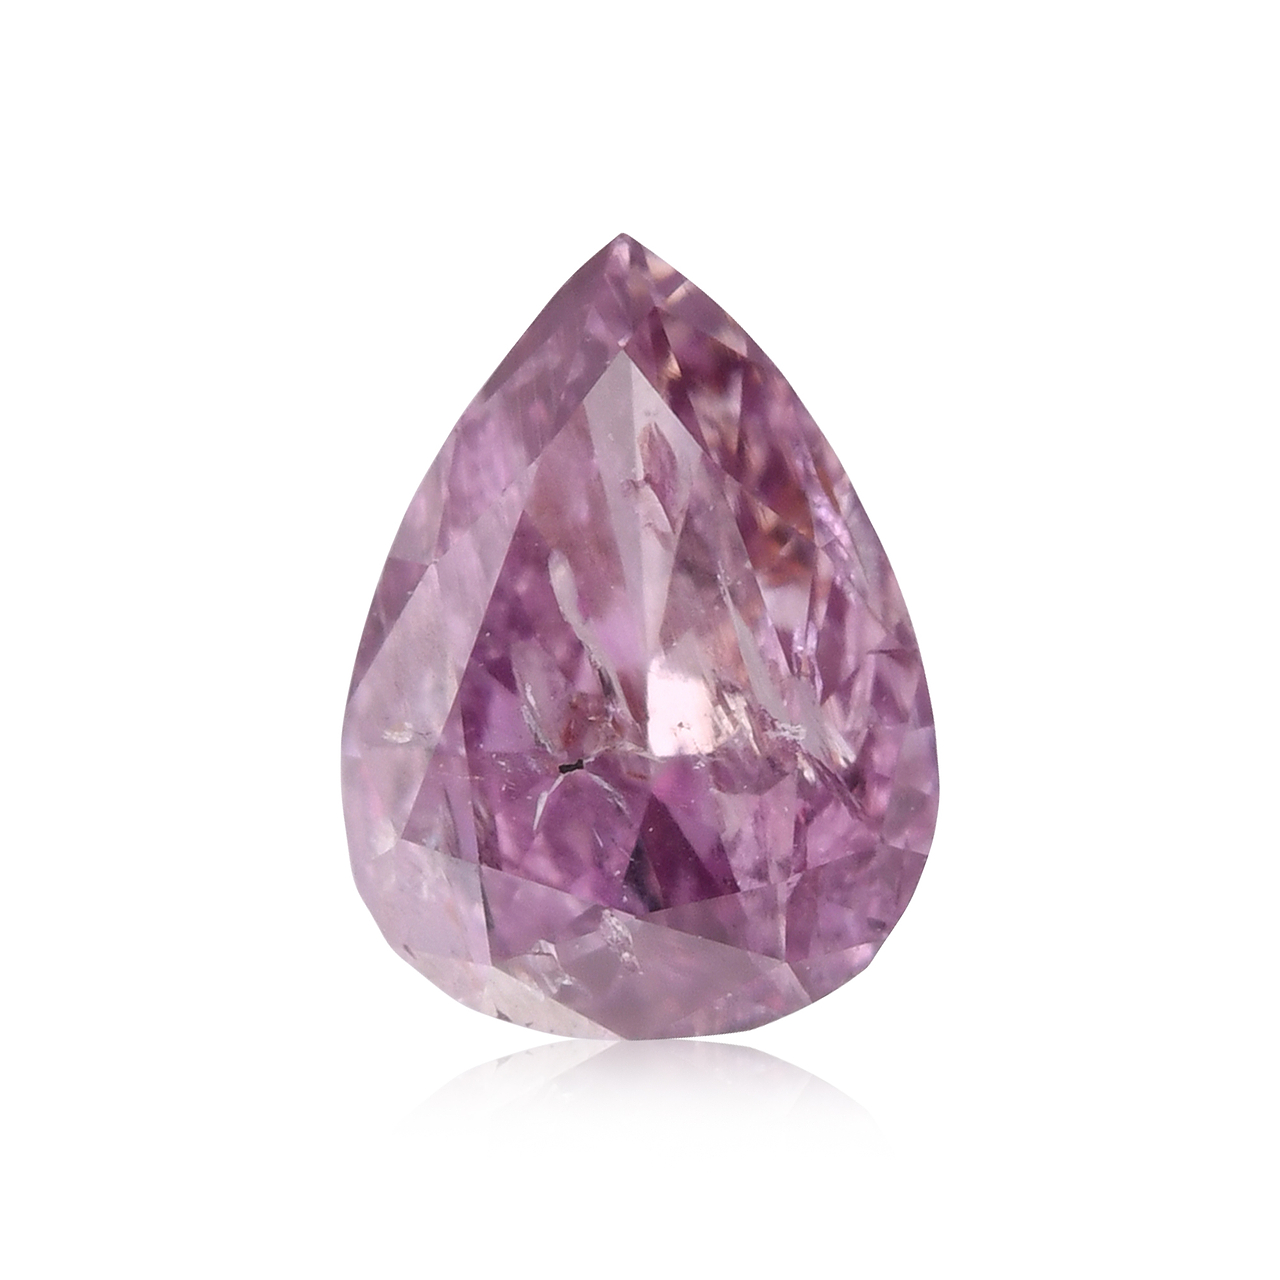 0.23 carat, Fancy Deep Purple Pink Diamond, Pear Shape, (I2) Clarity, GIA,  SKU 451208